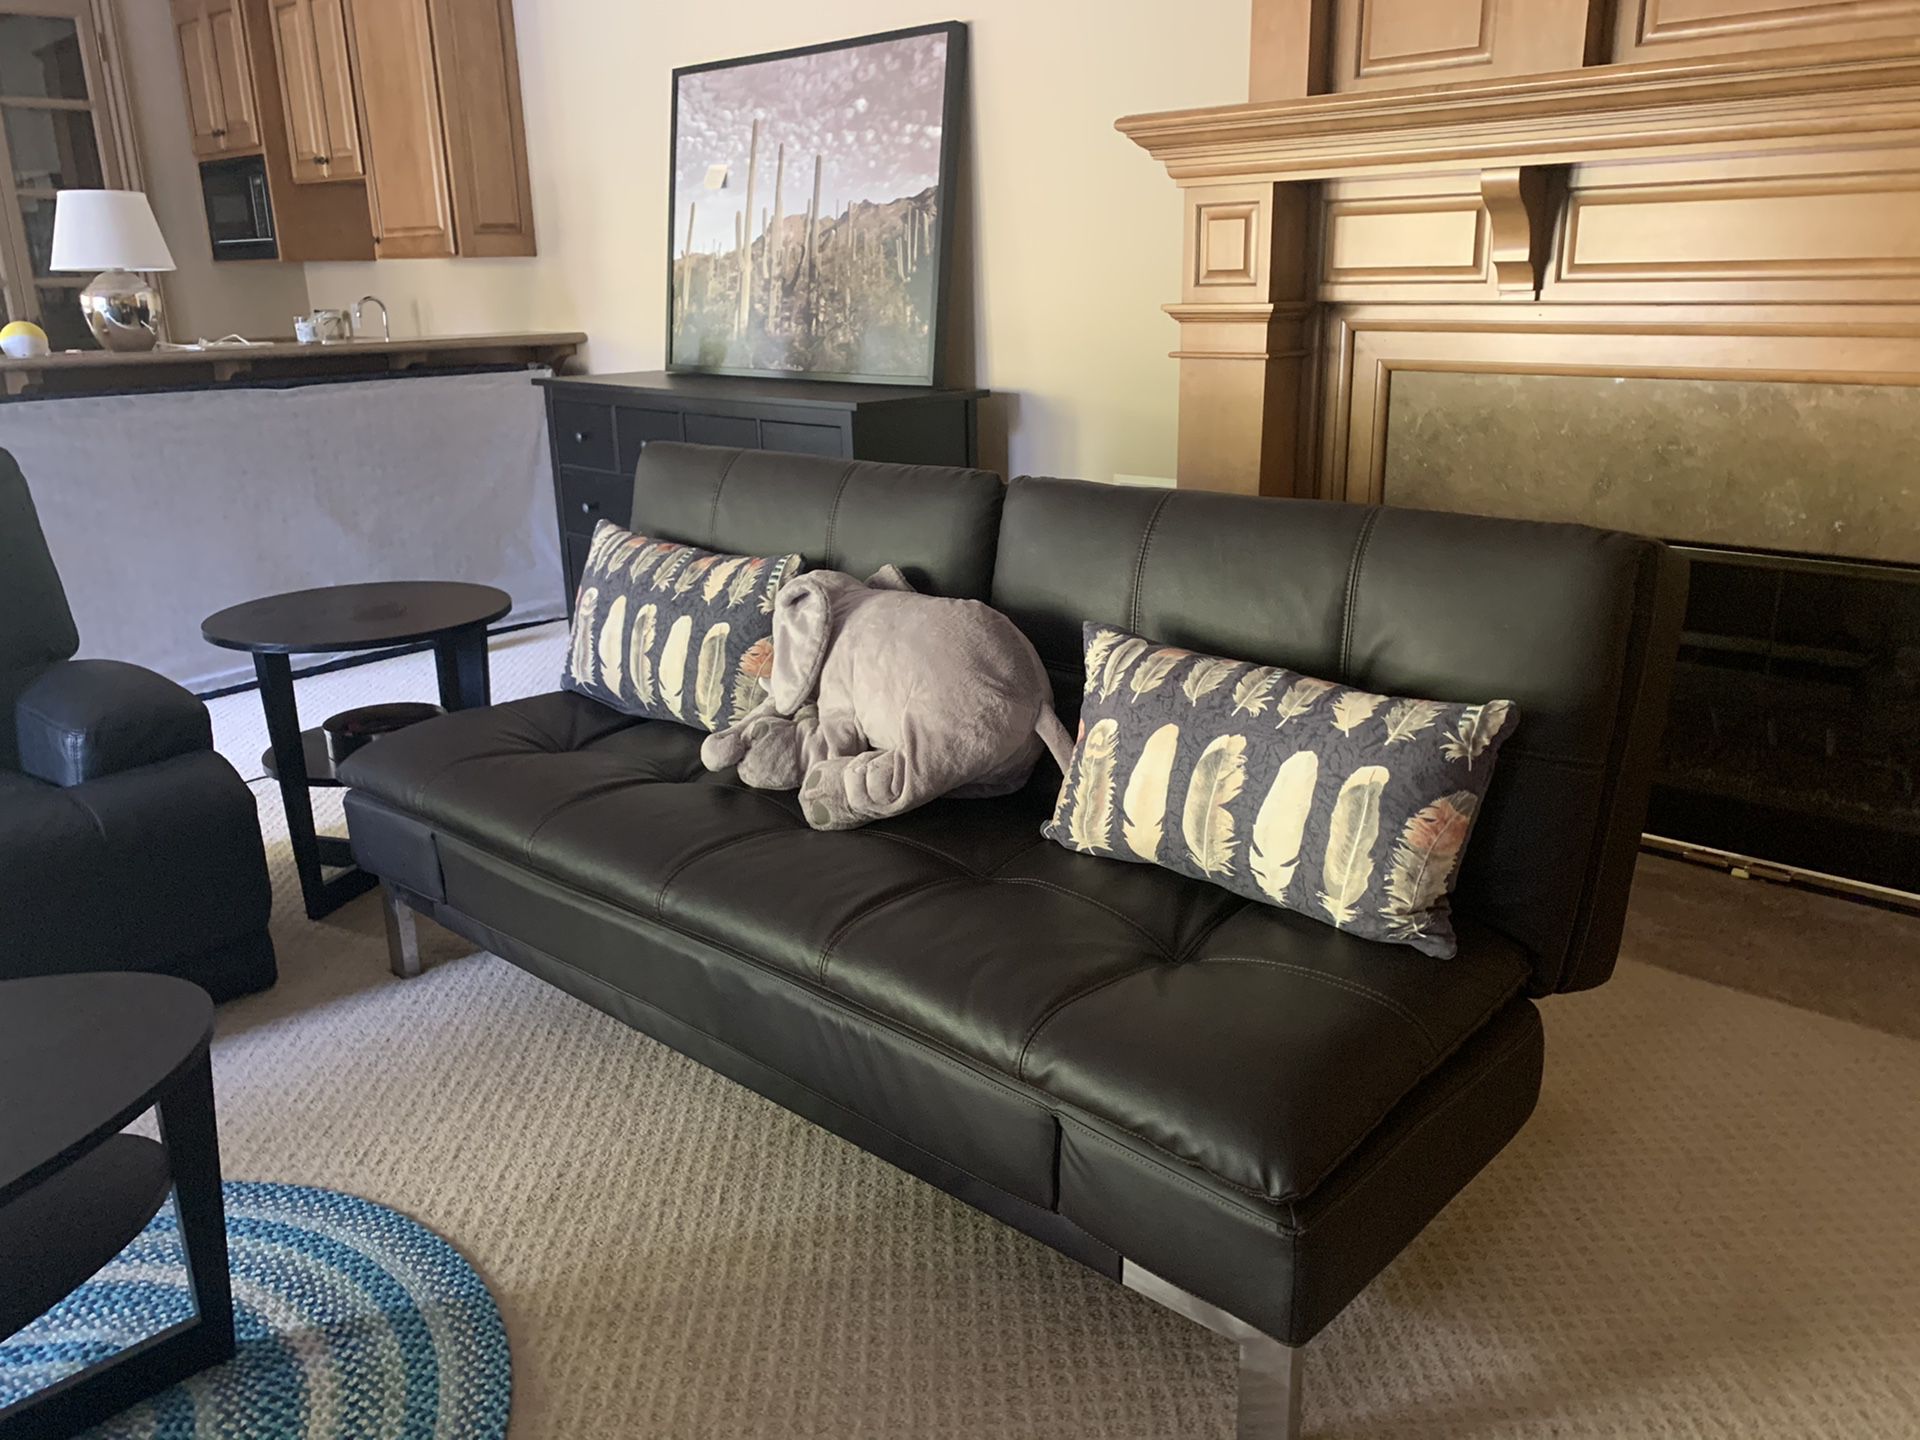 IKEA - black leather Sleeper sofa/couch/futon